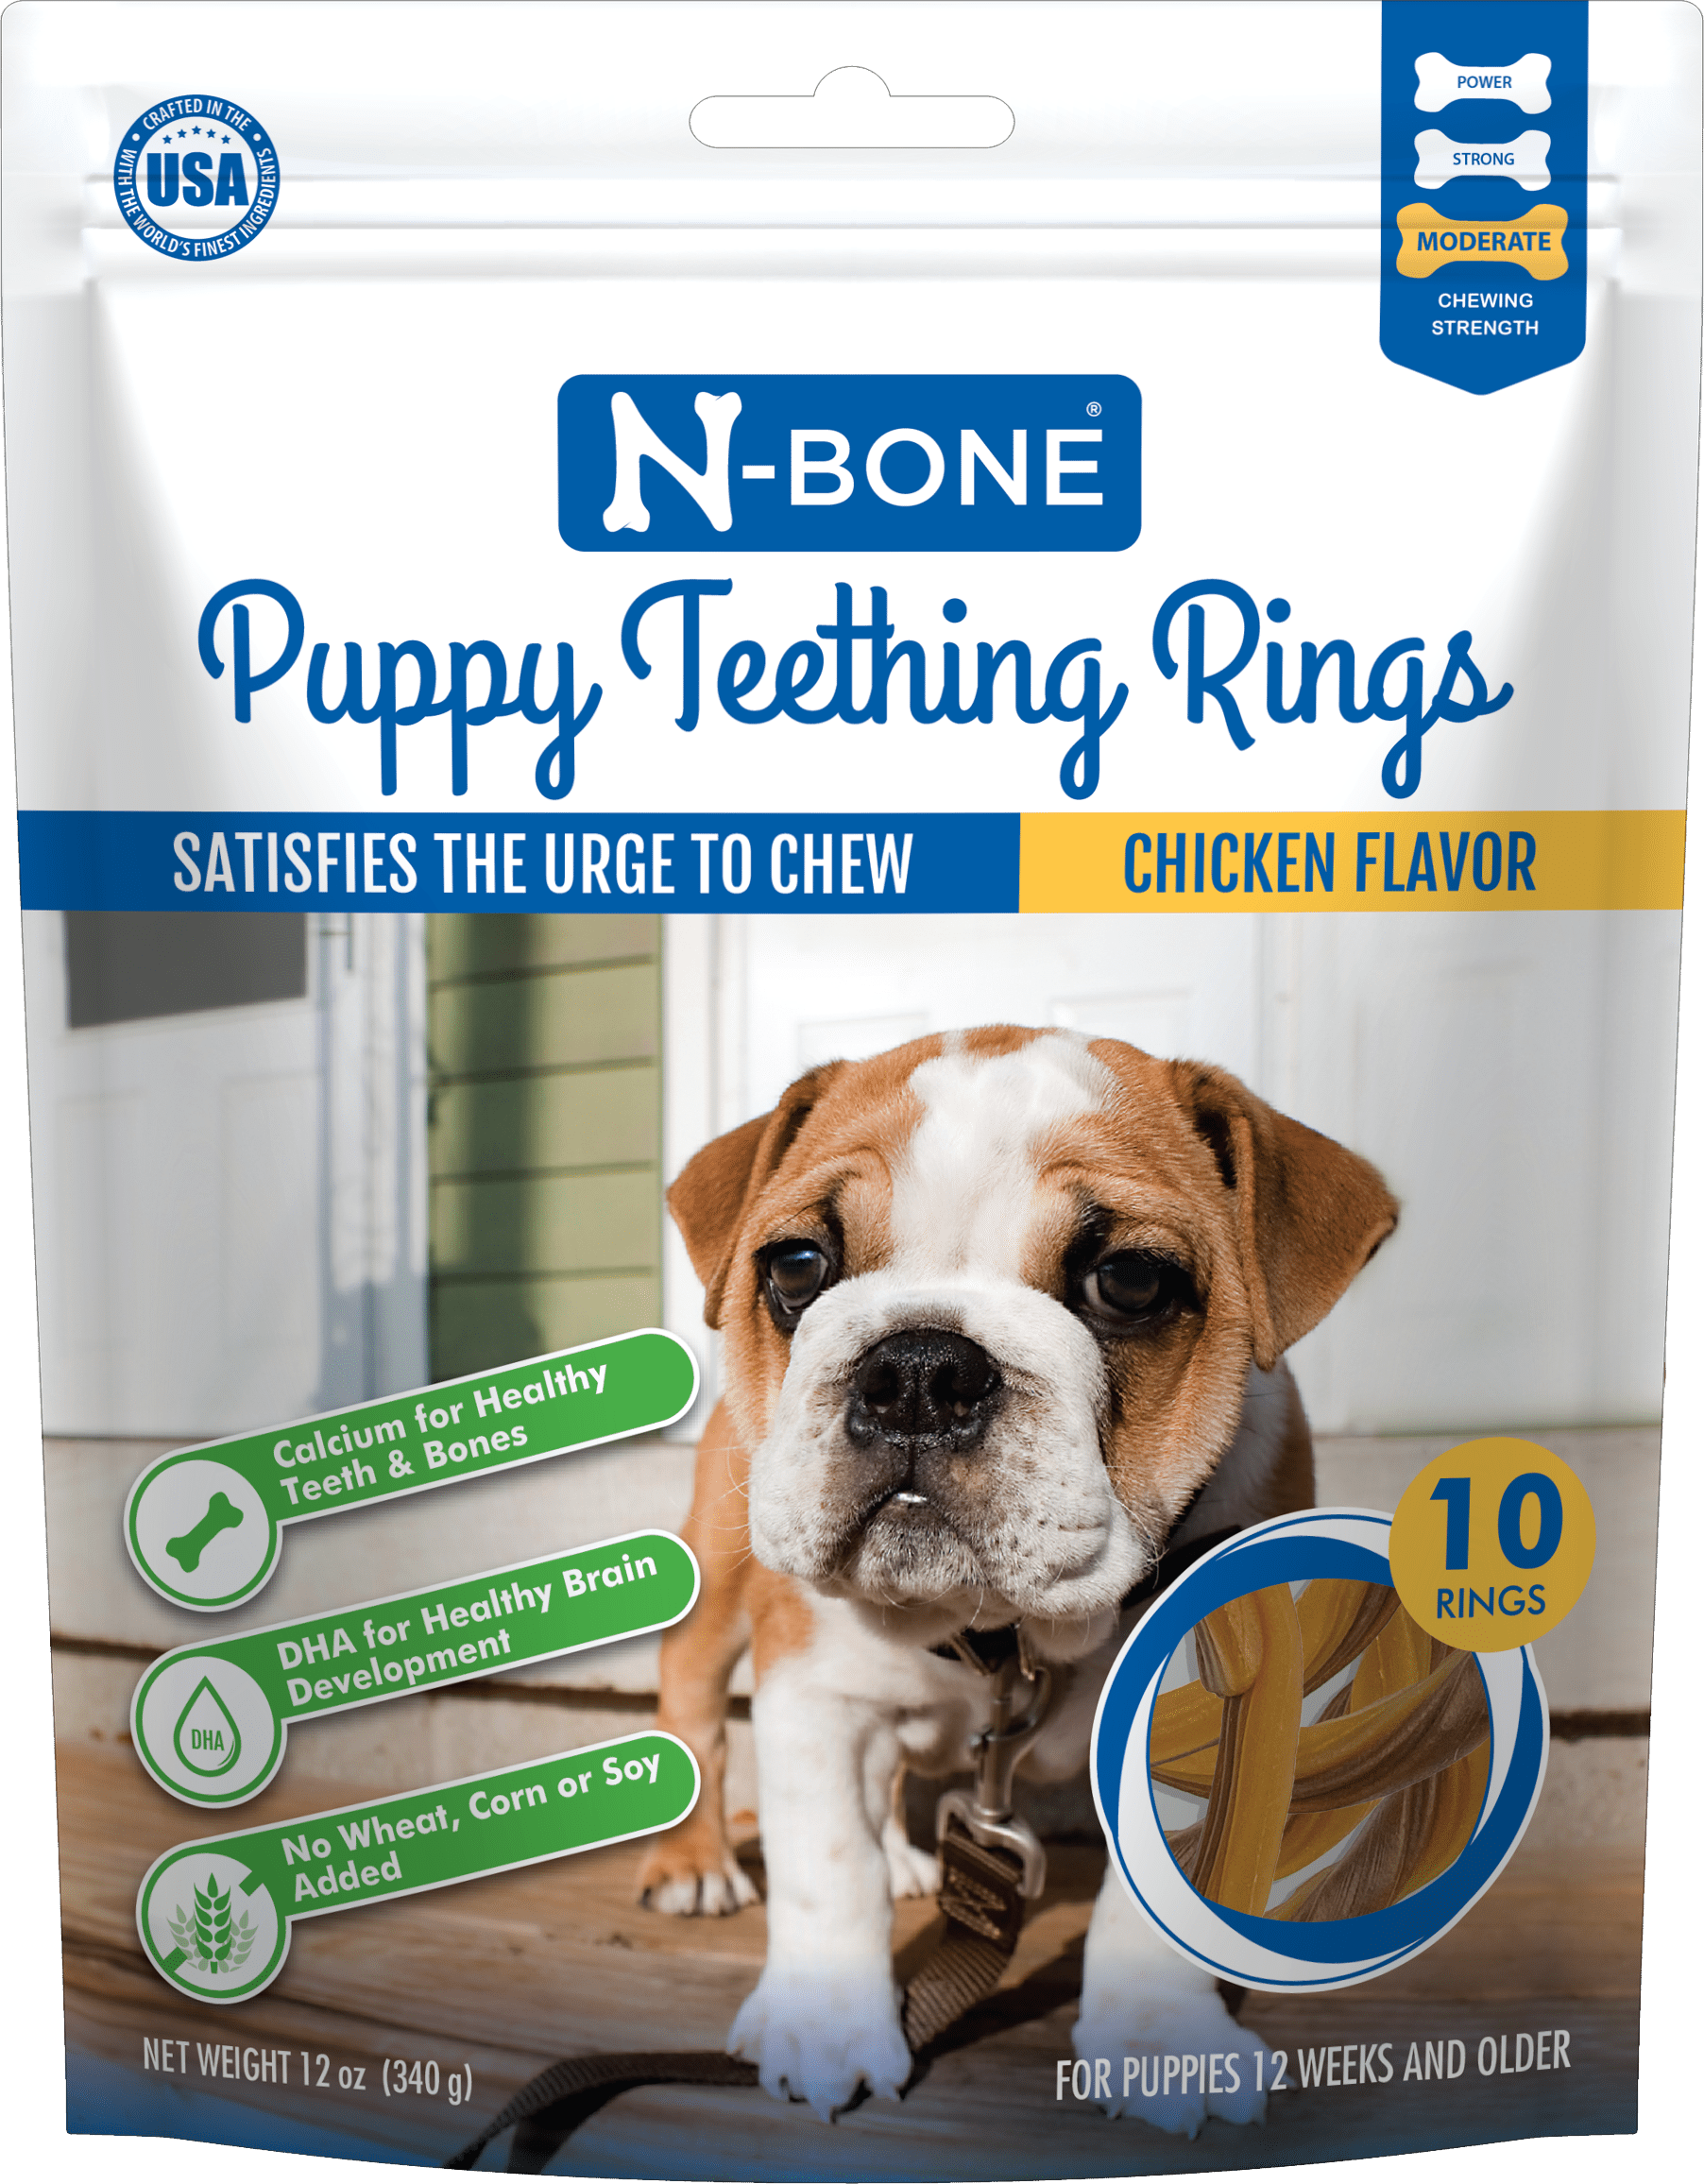 N-Bone® Puppy Teething Rings Chicken Flavor, 10 Treats, 12oz, Dried Chew Treats for Dogs